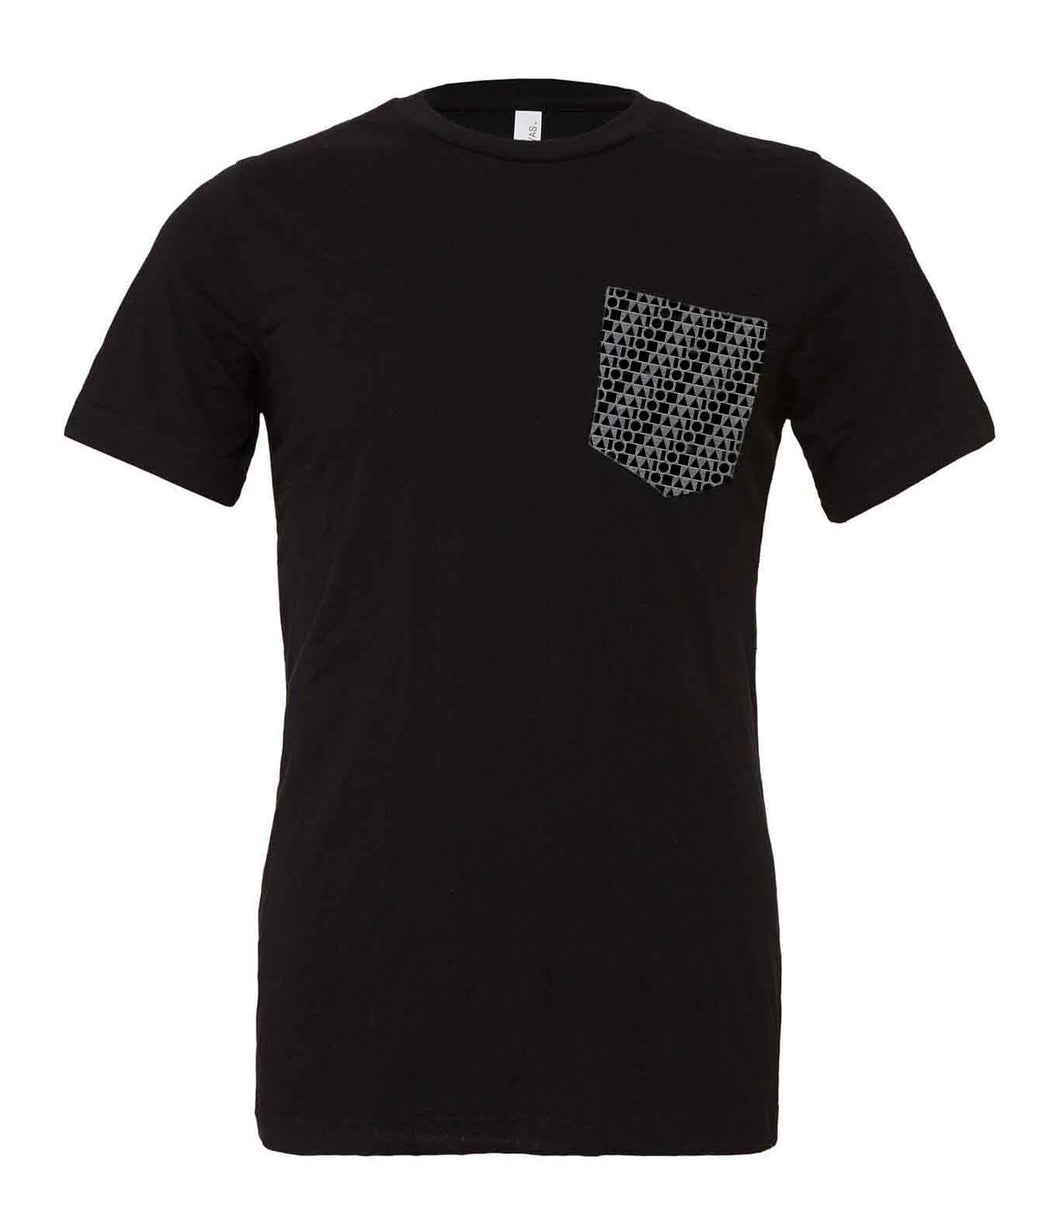 Black unisex short sleeve pocket tee printed on grey pocket with black repeated Aloha Shapes logo